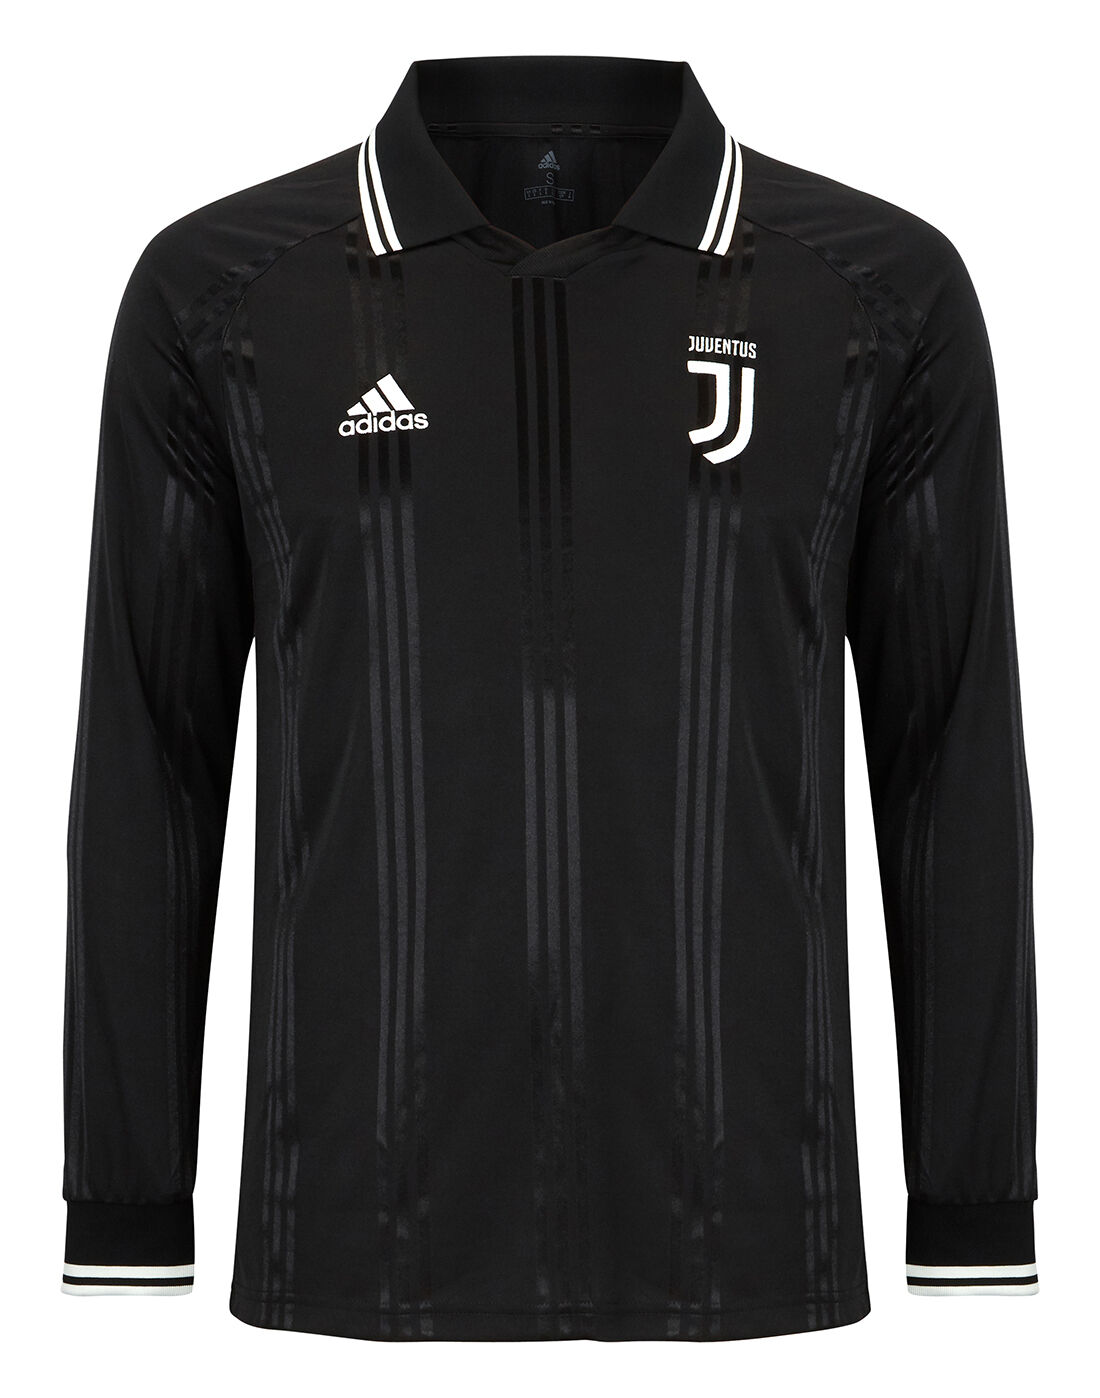 adidas Adult Juventus Retro Jersey 